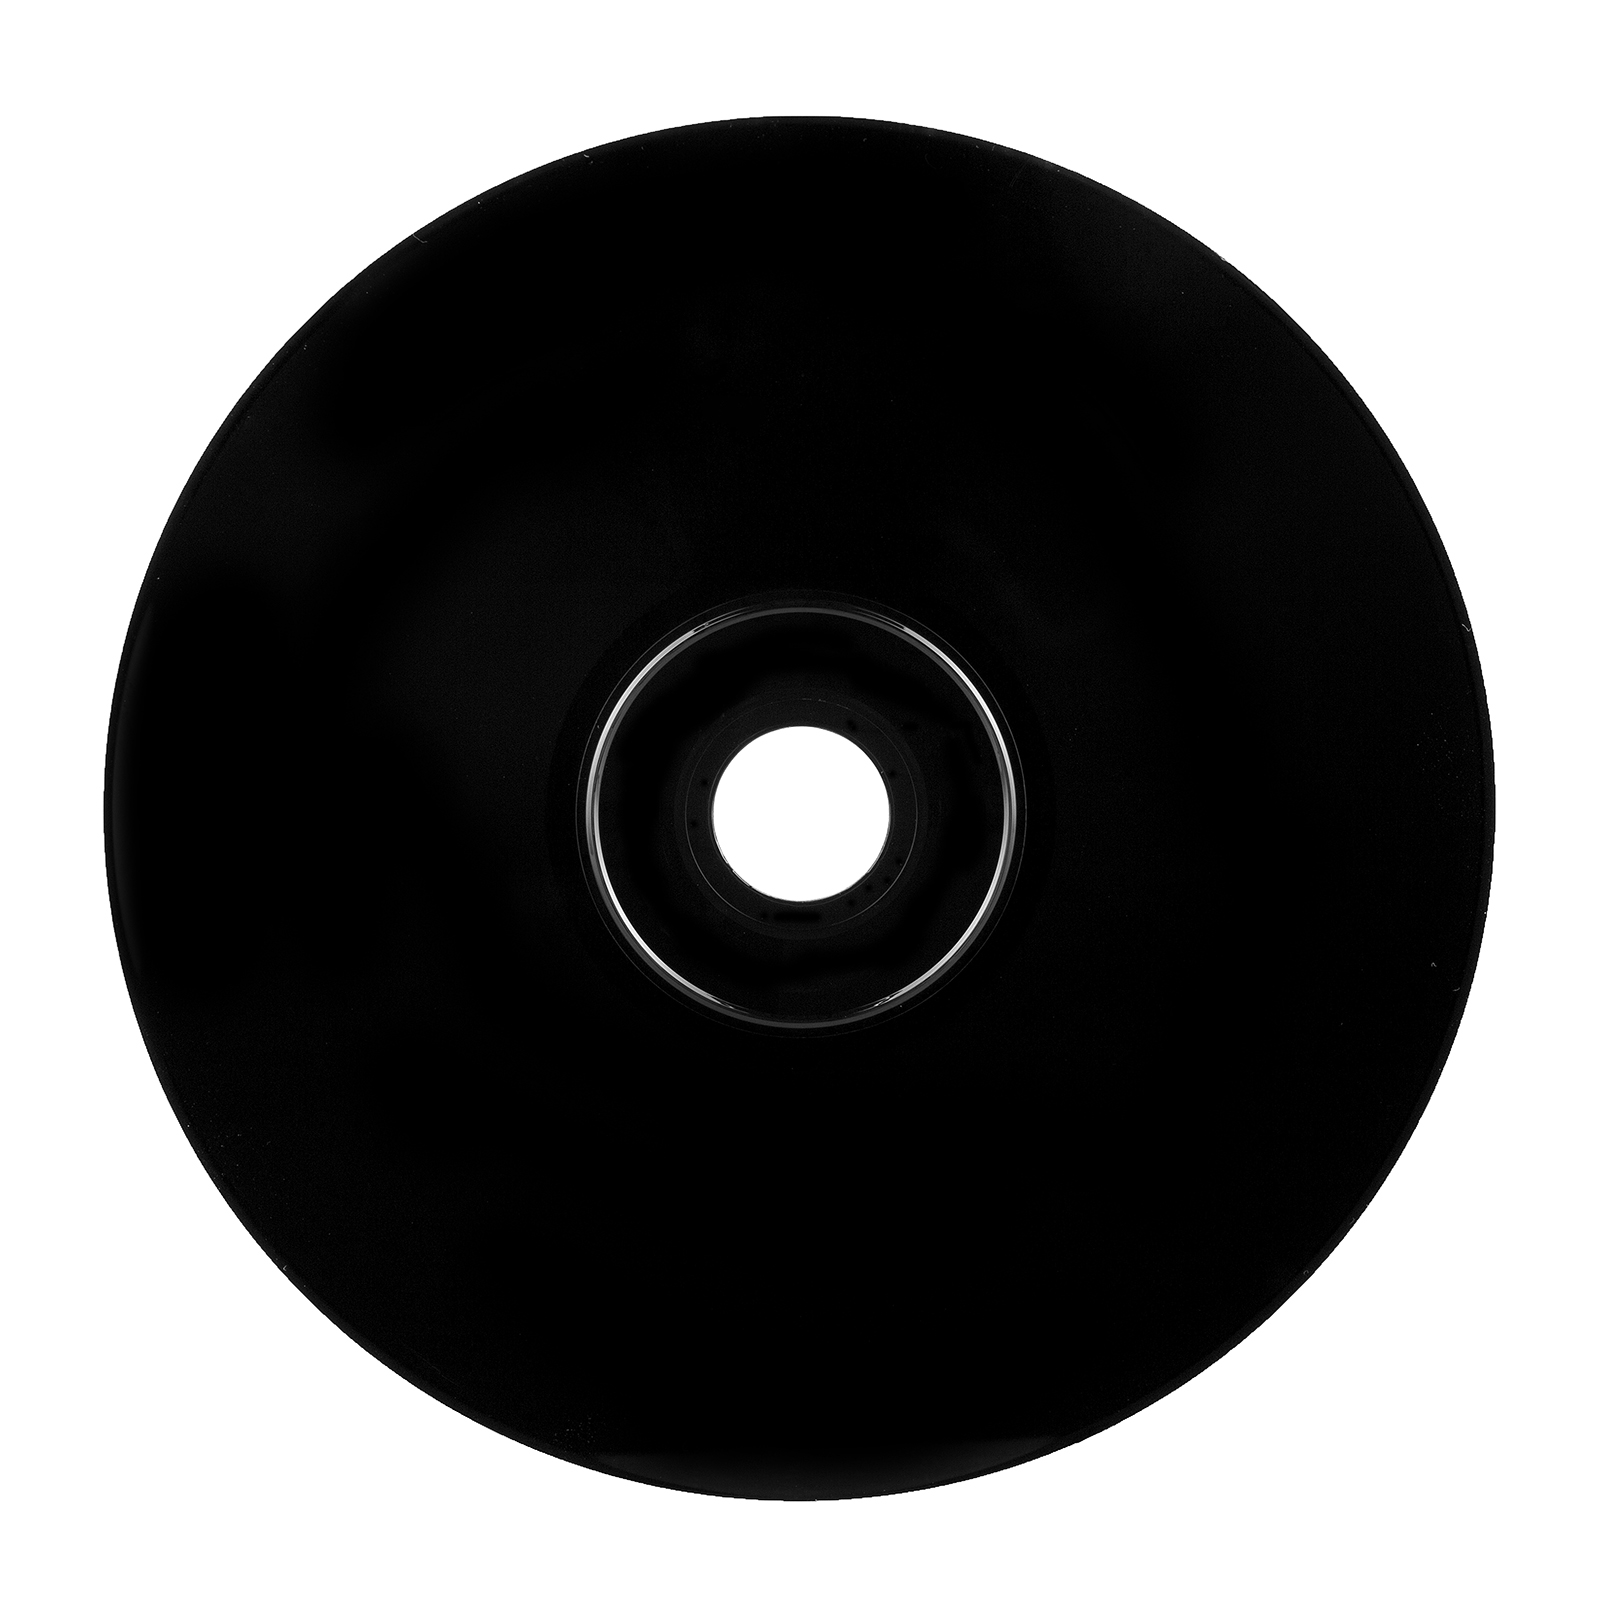 25pcs CDR 700MB 80min Audio Disc 52X Black Vinyl Record 65mm Center